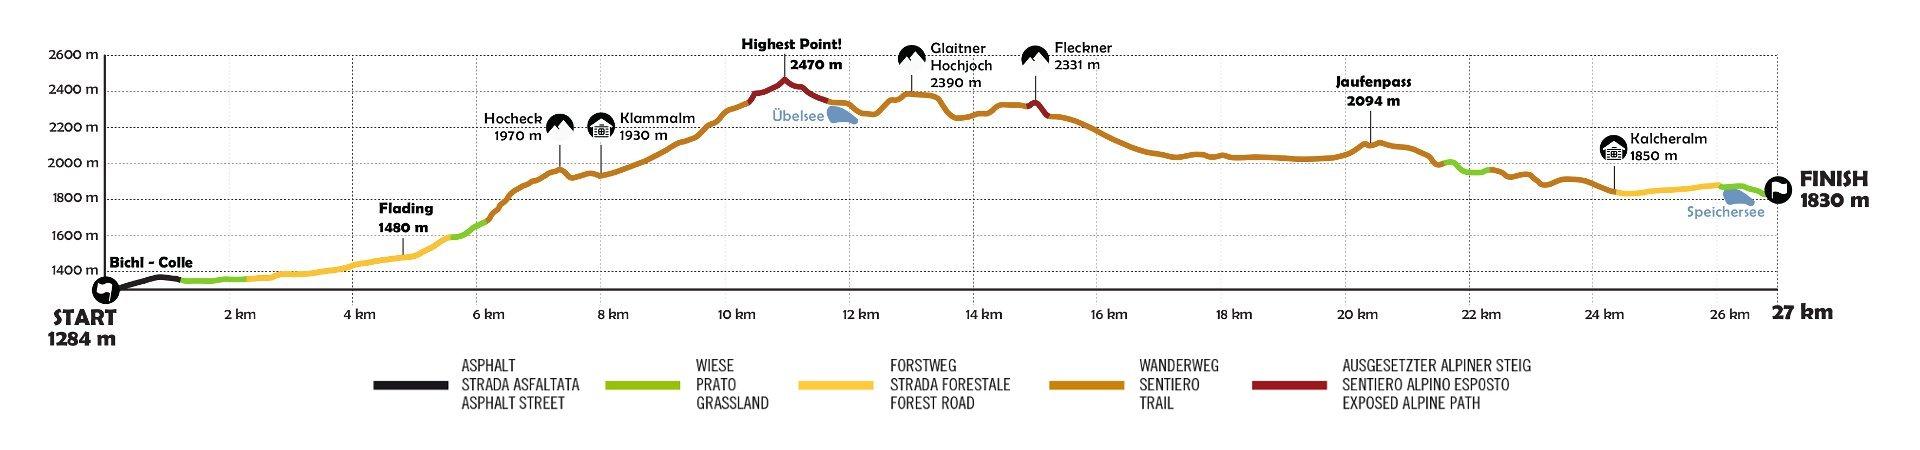 Ratschings Mountaintrail altitude profile